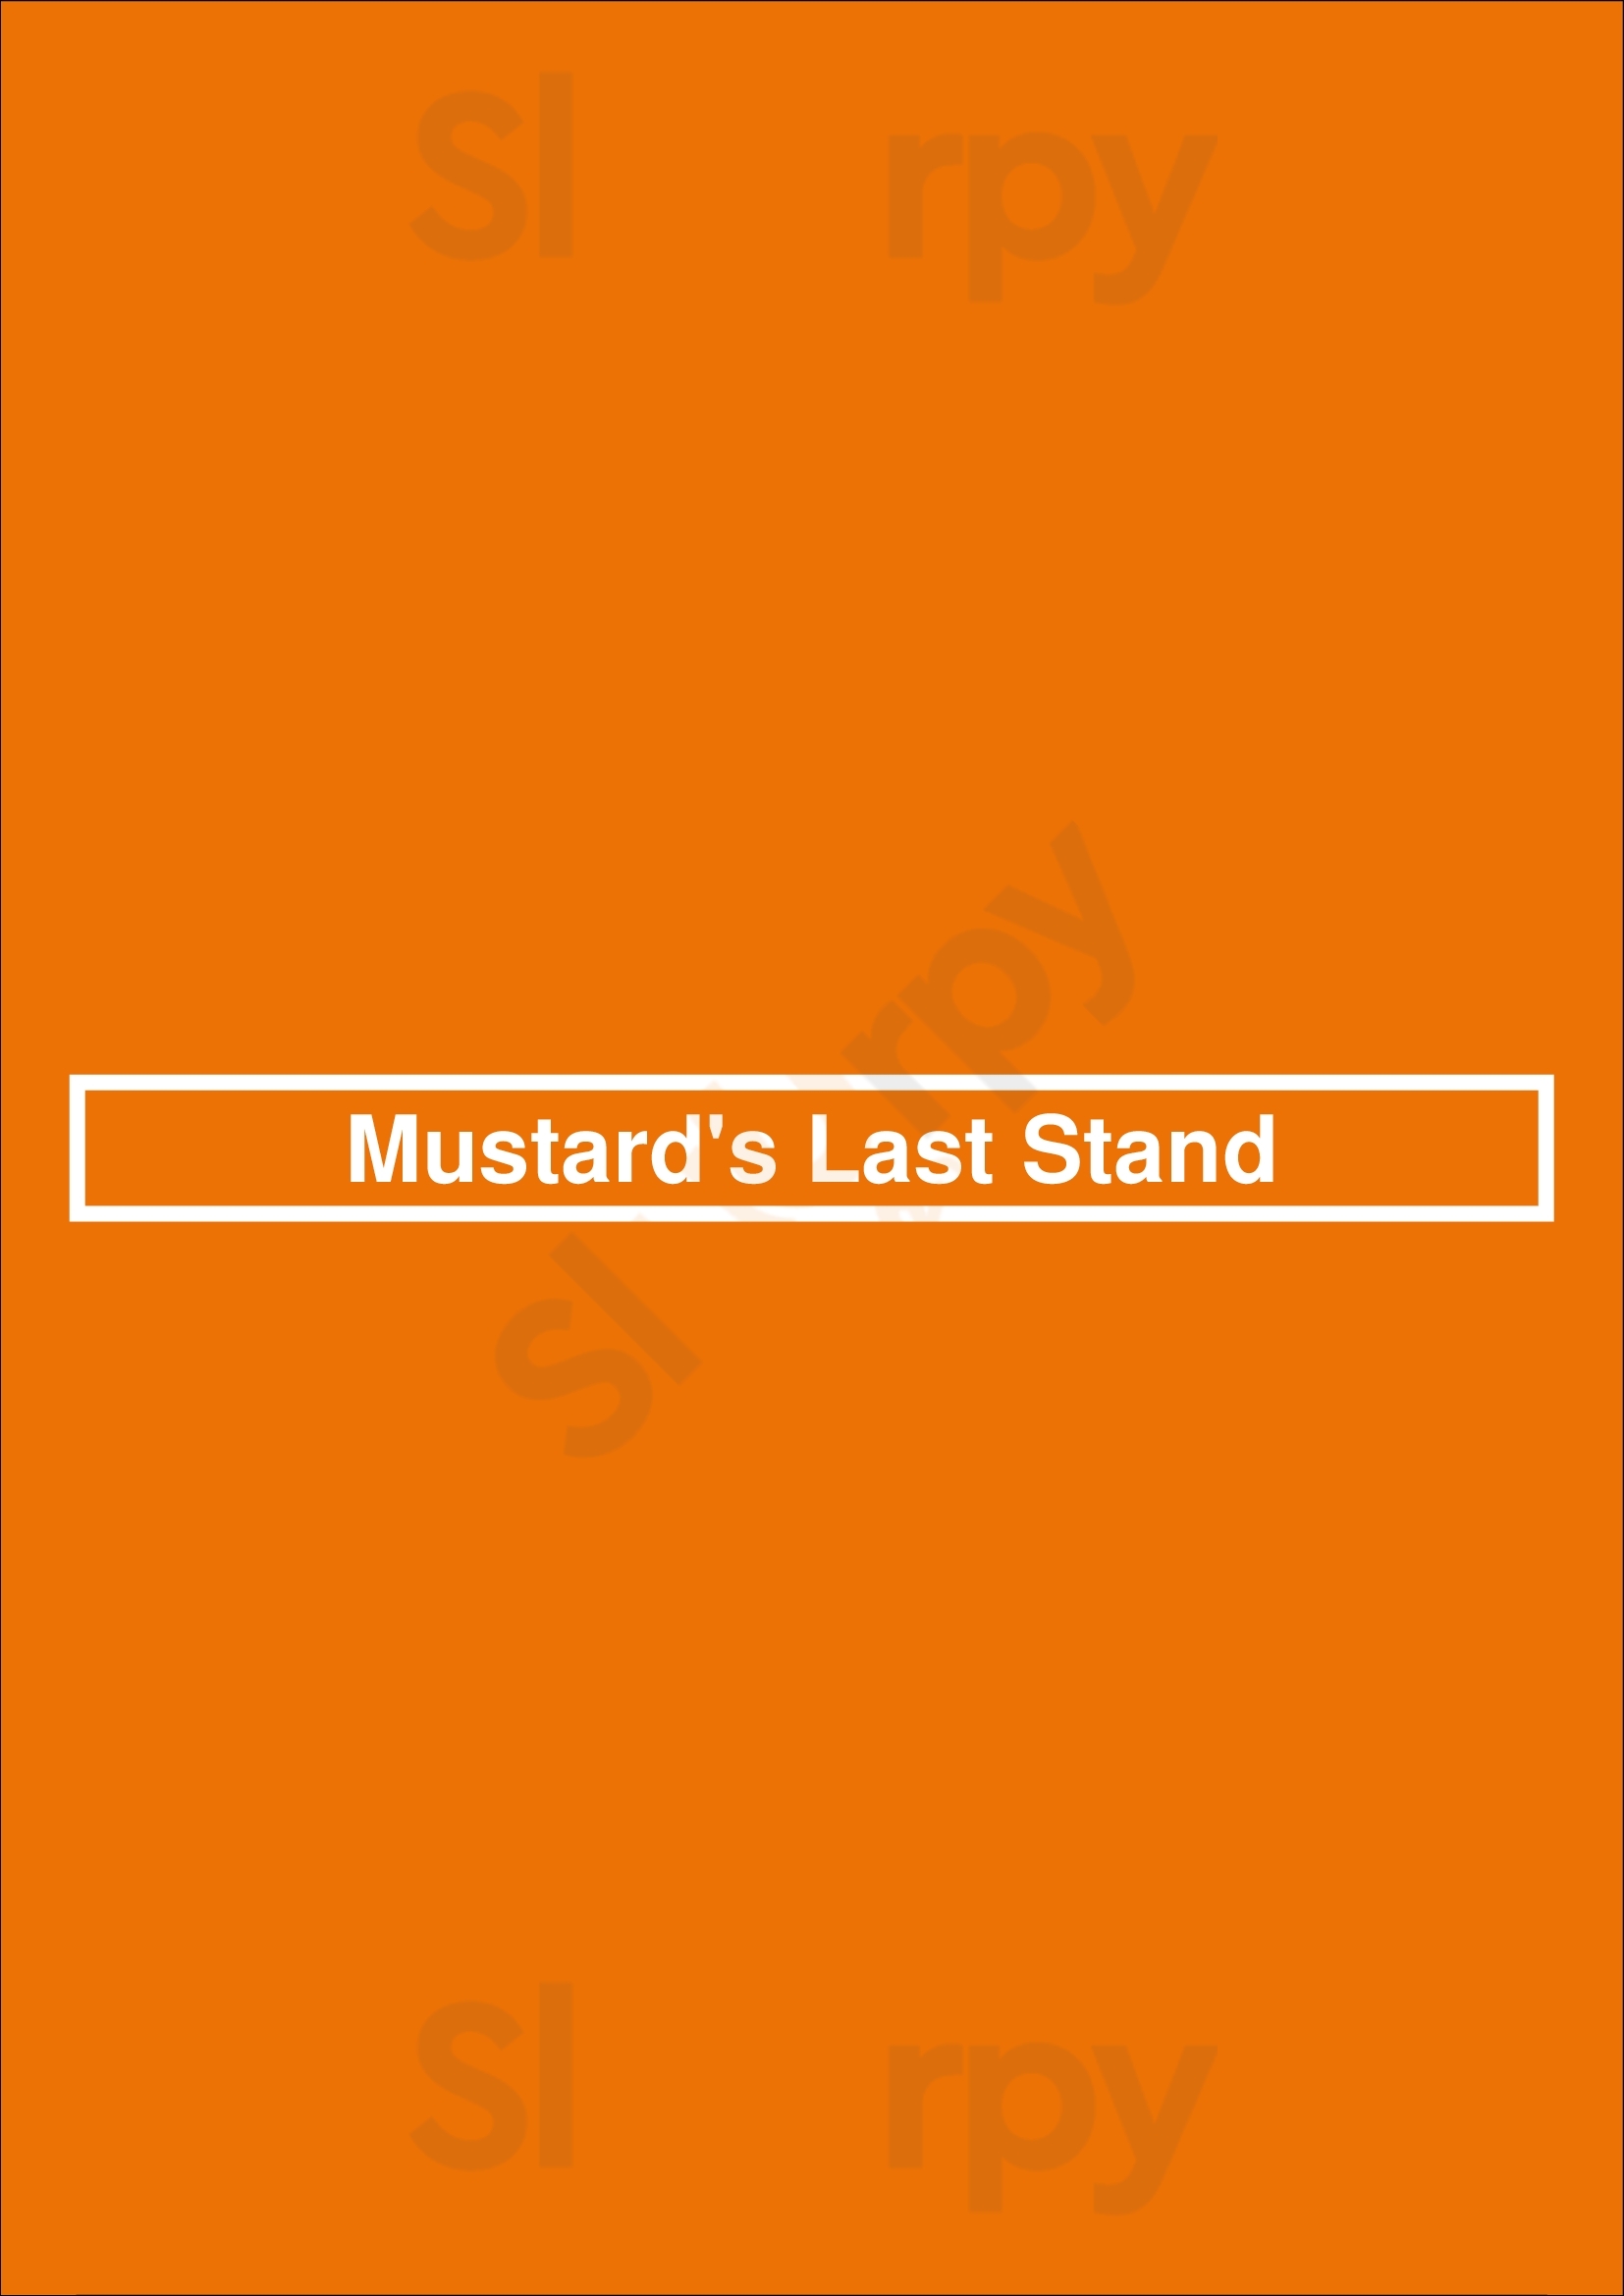 Mustard's Last Stand Denver Menu - 1